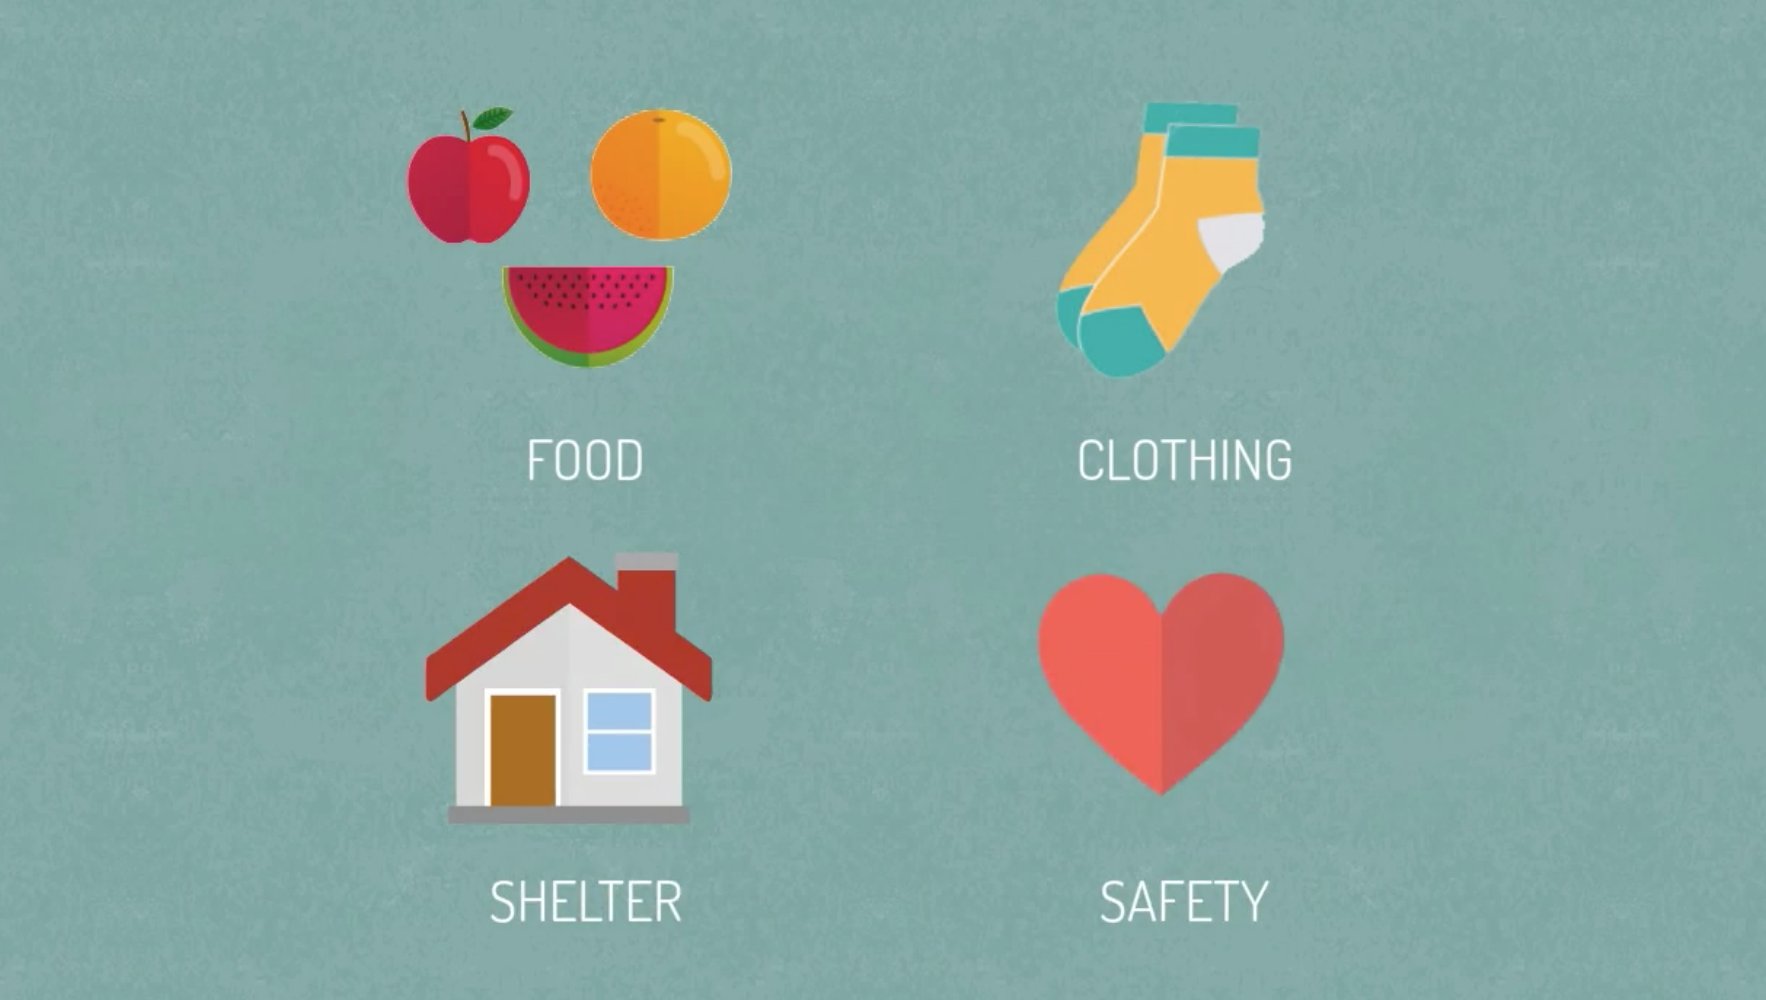 Niles on X: Children have basic needs like food, shelter, safety